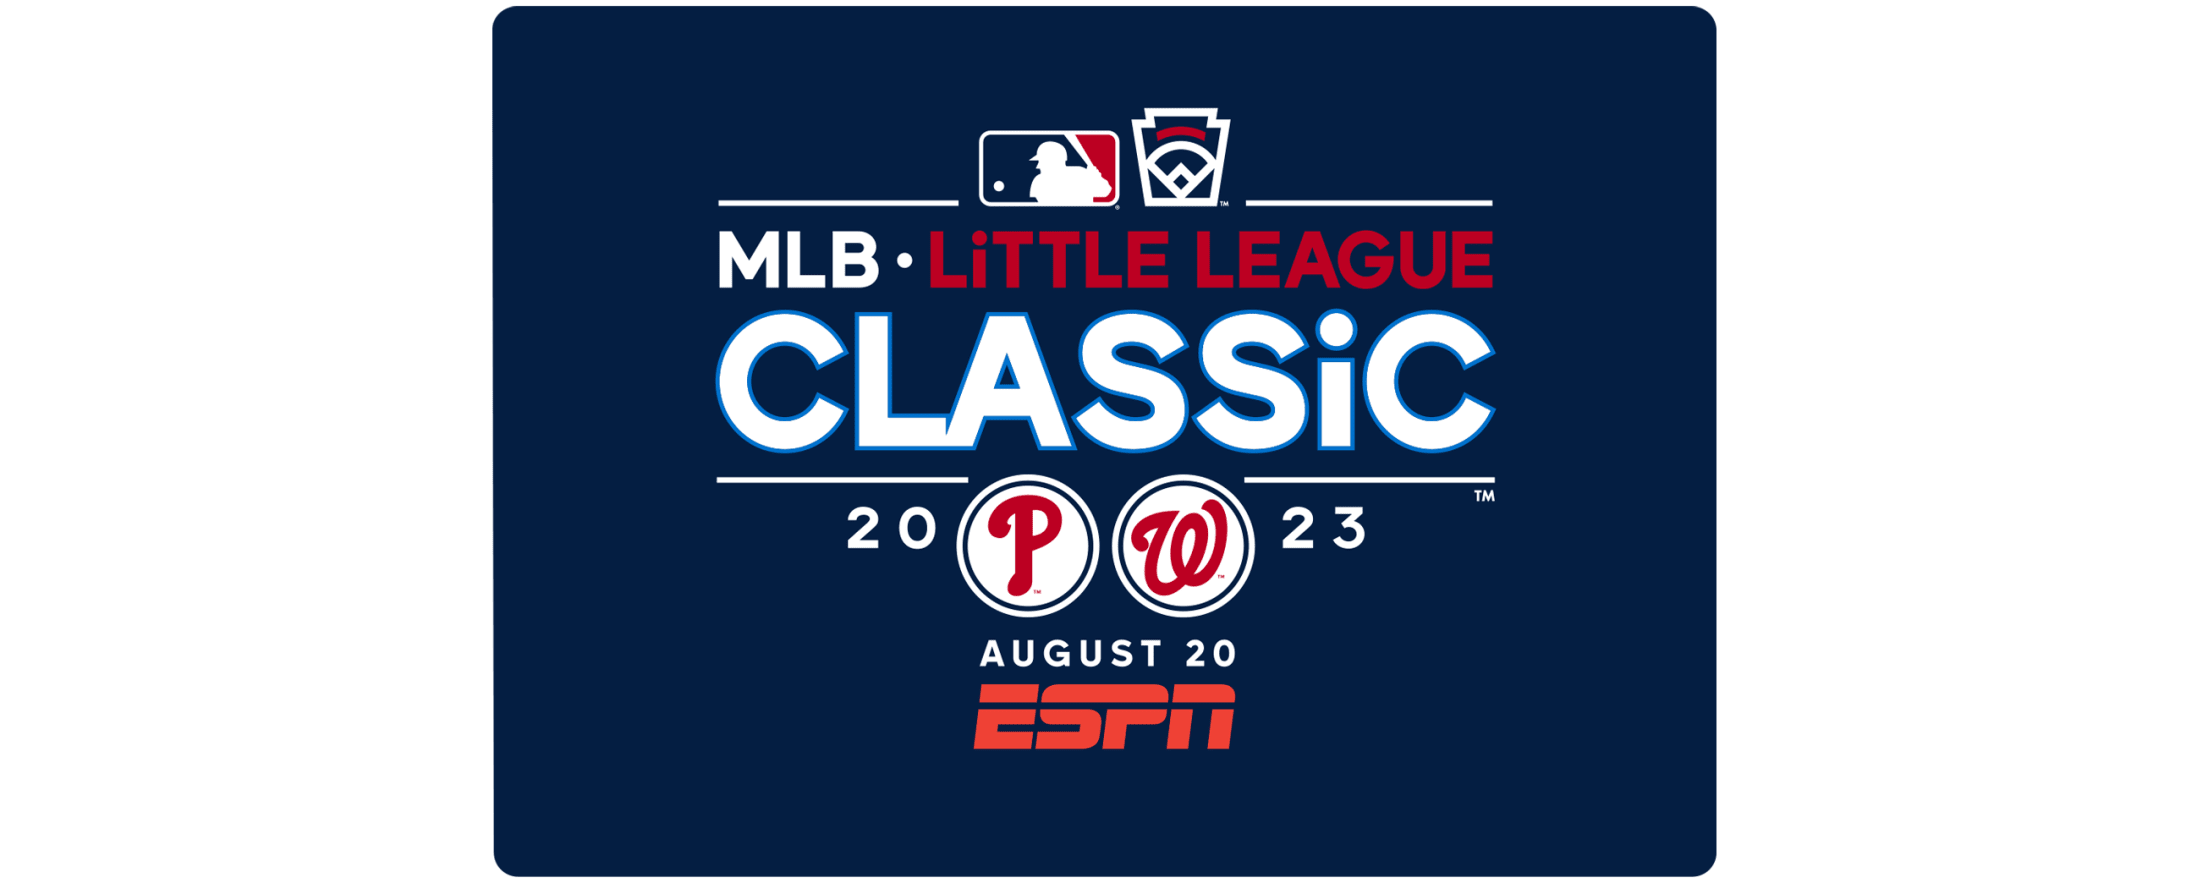 2022 MLB Little League Classic Vlog  Little League World Series Feature 